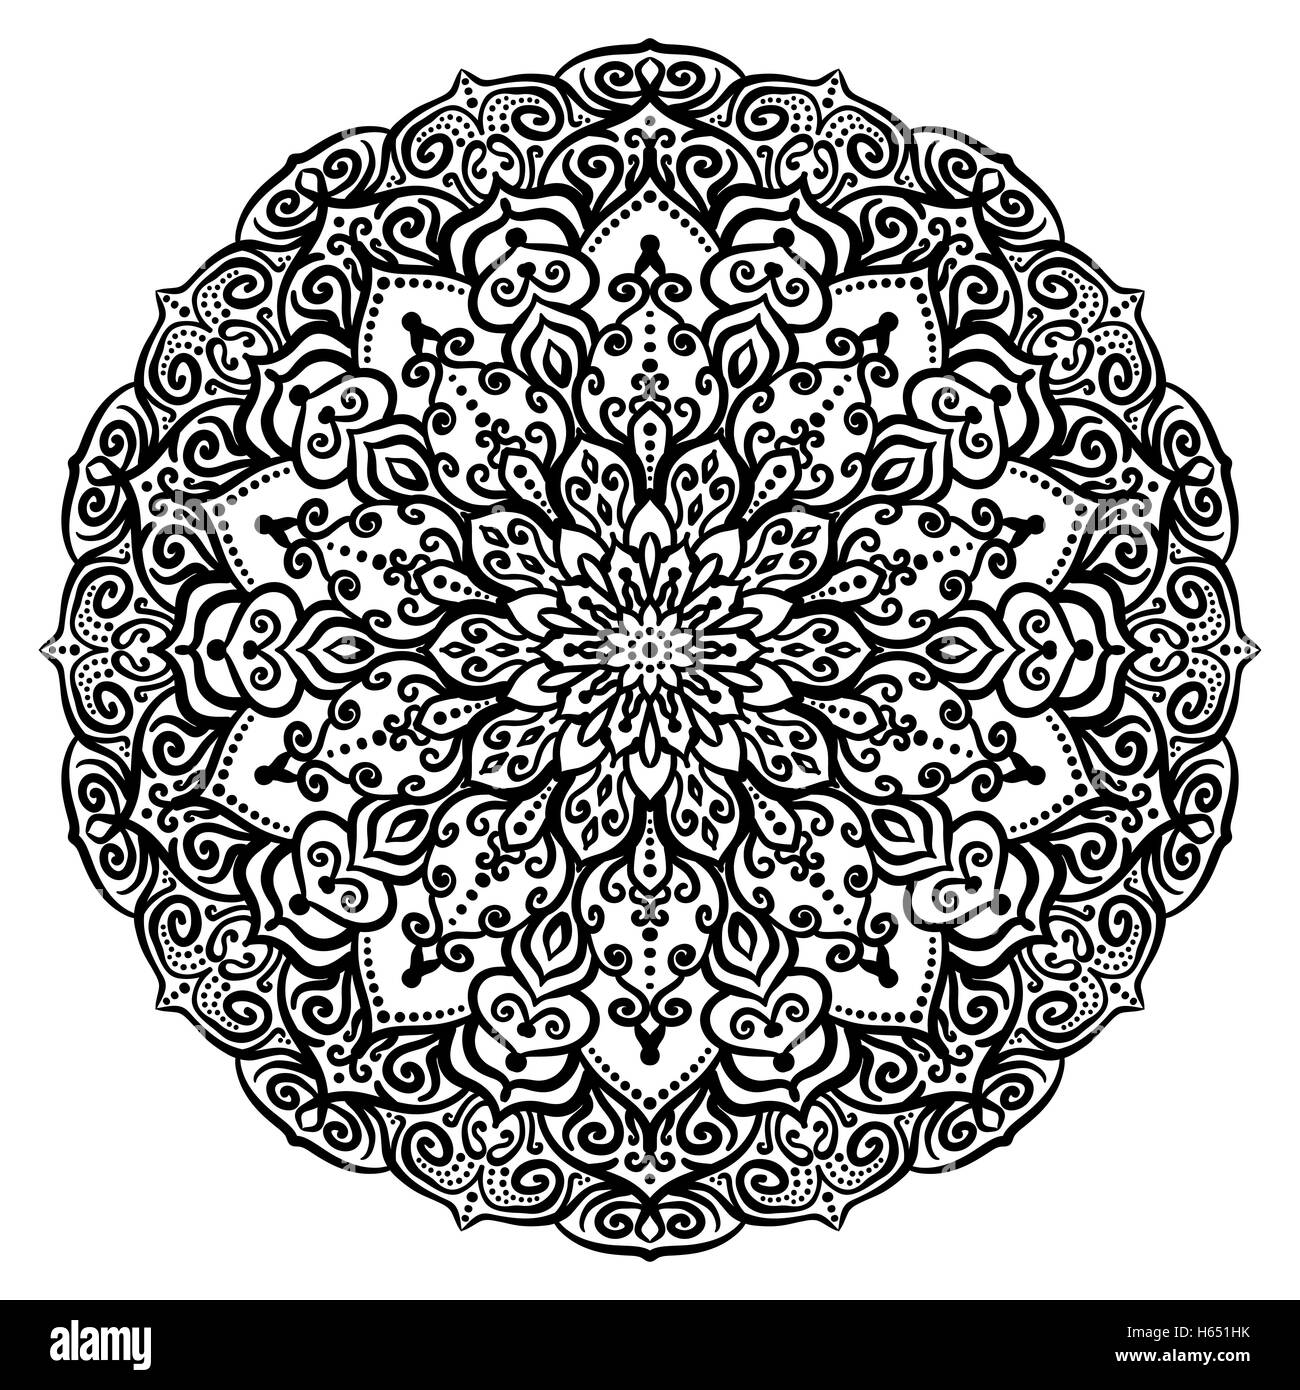 Mandala Stencil - Flower of Life Stencil - Mandala-Style Stencil - Flower of Life Design- Wall Stencil - Geometric Design 78